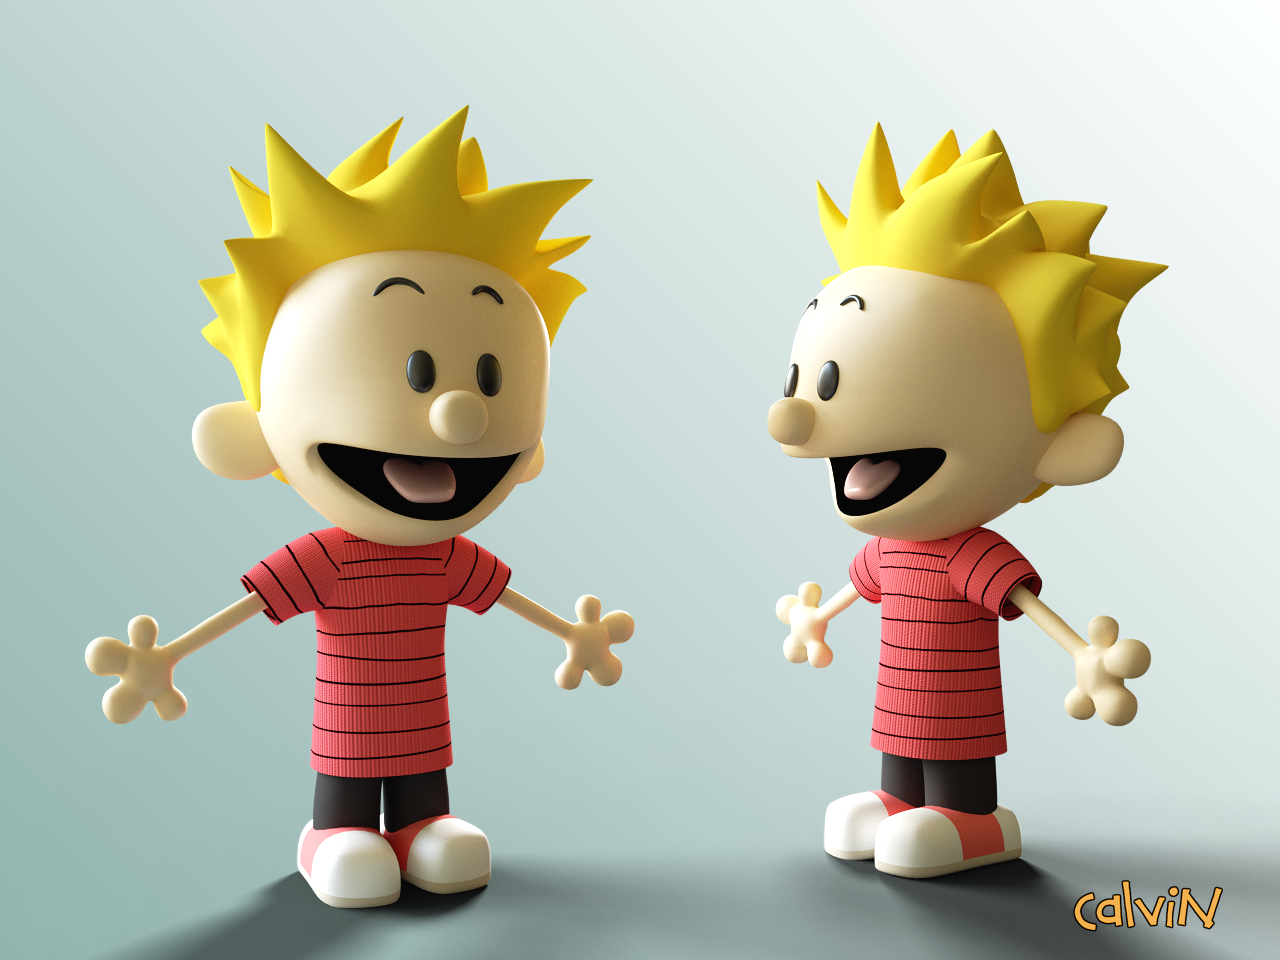 Calvin & Hobbes fan art.